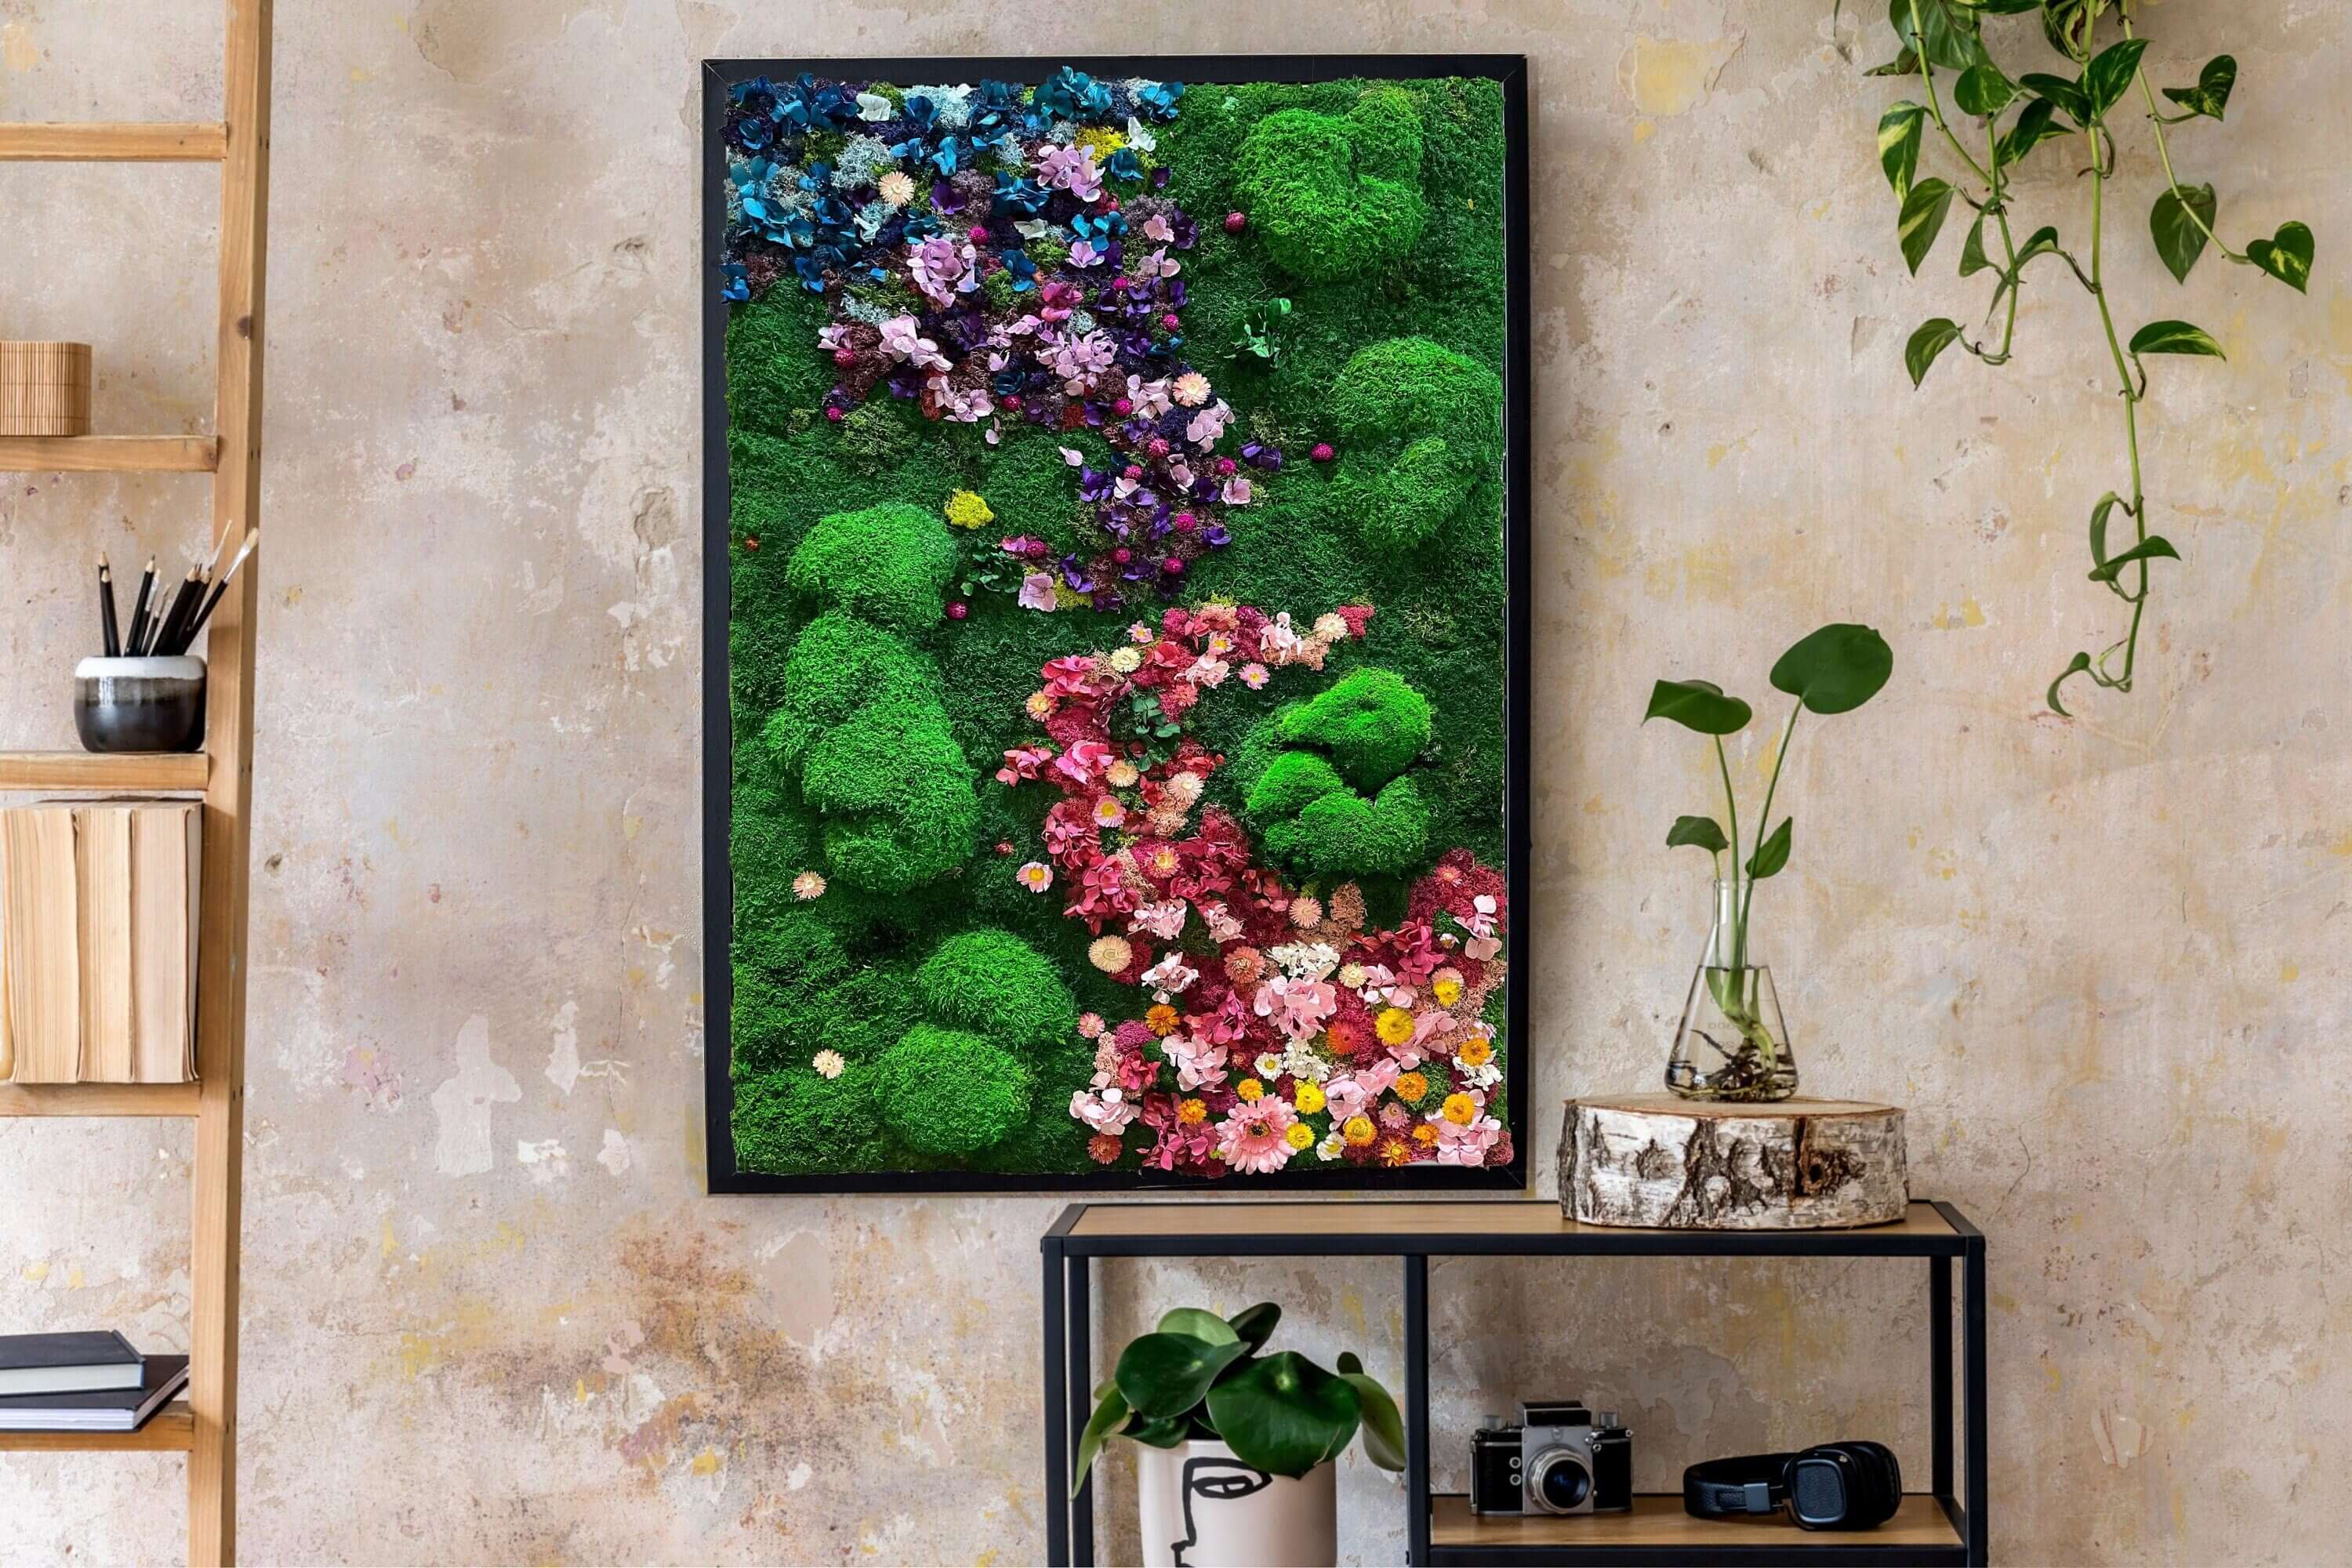 Rainbow Moss wall art with flowers